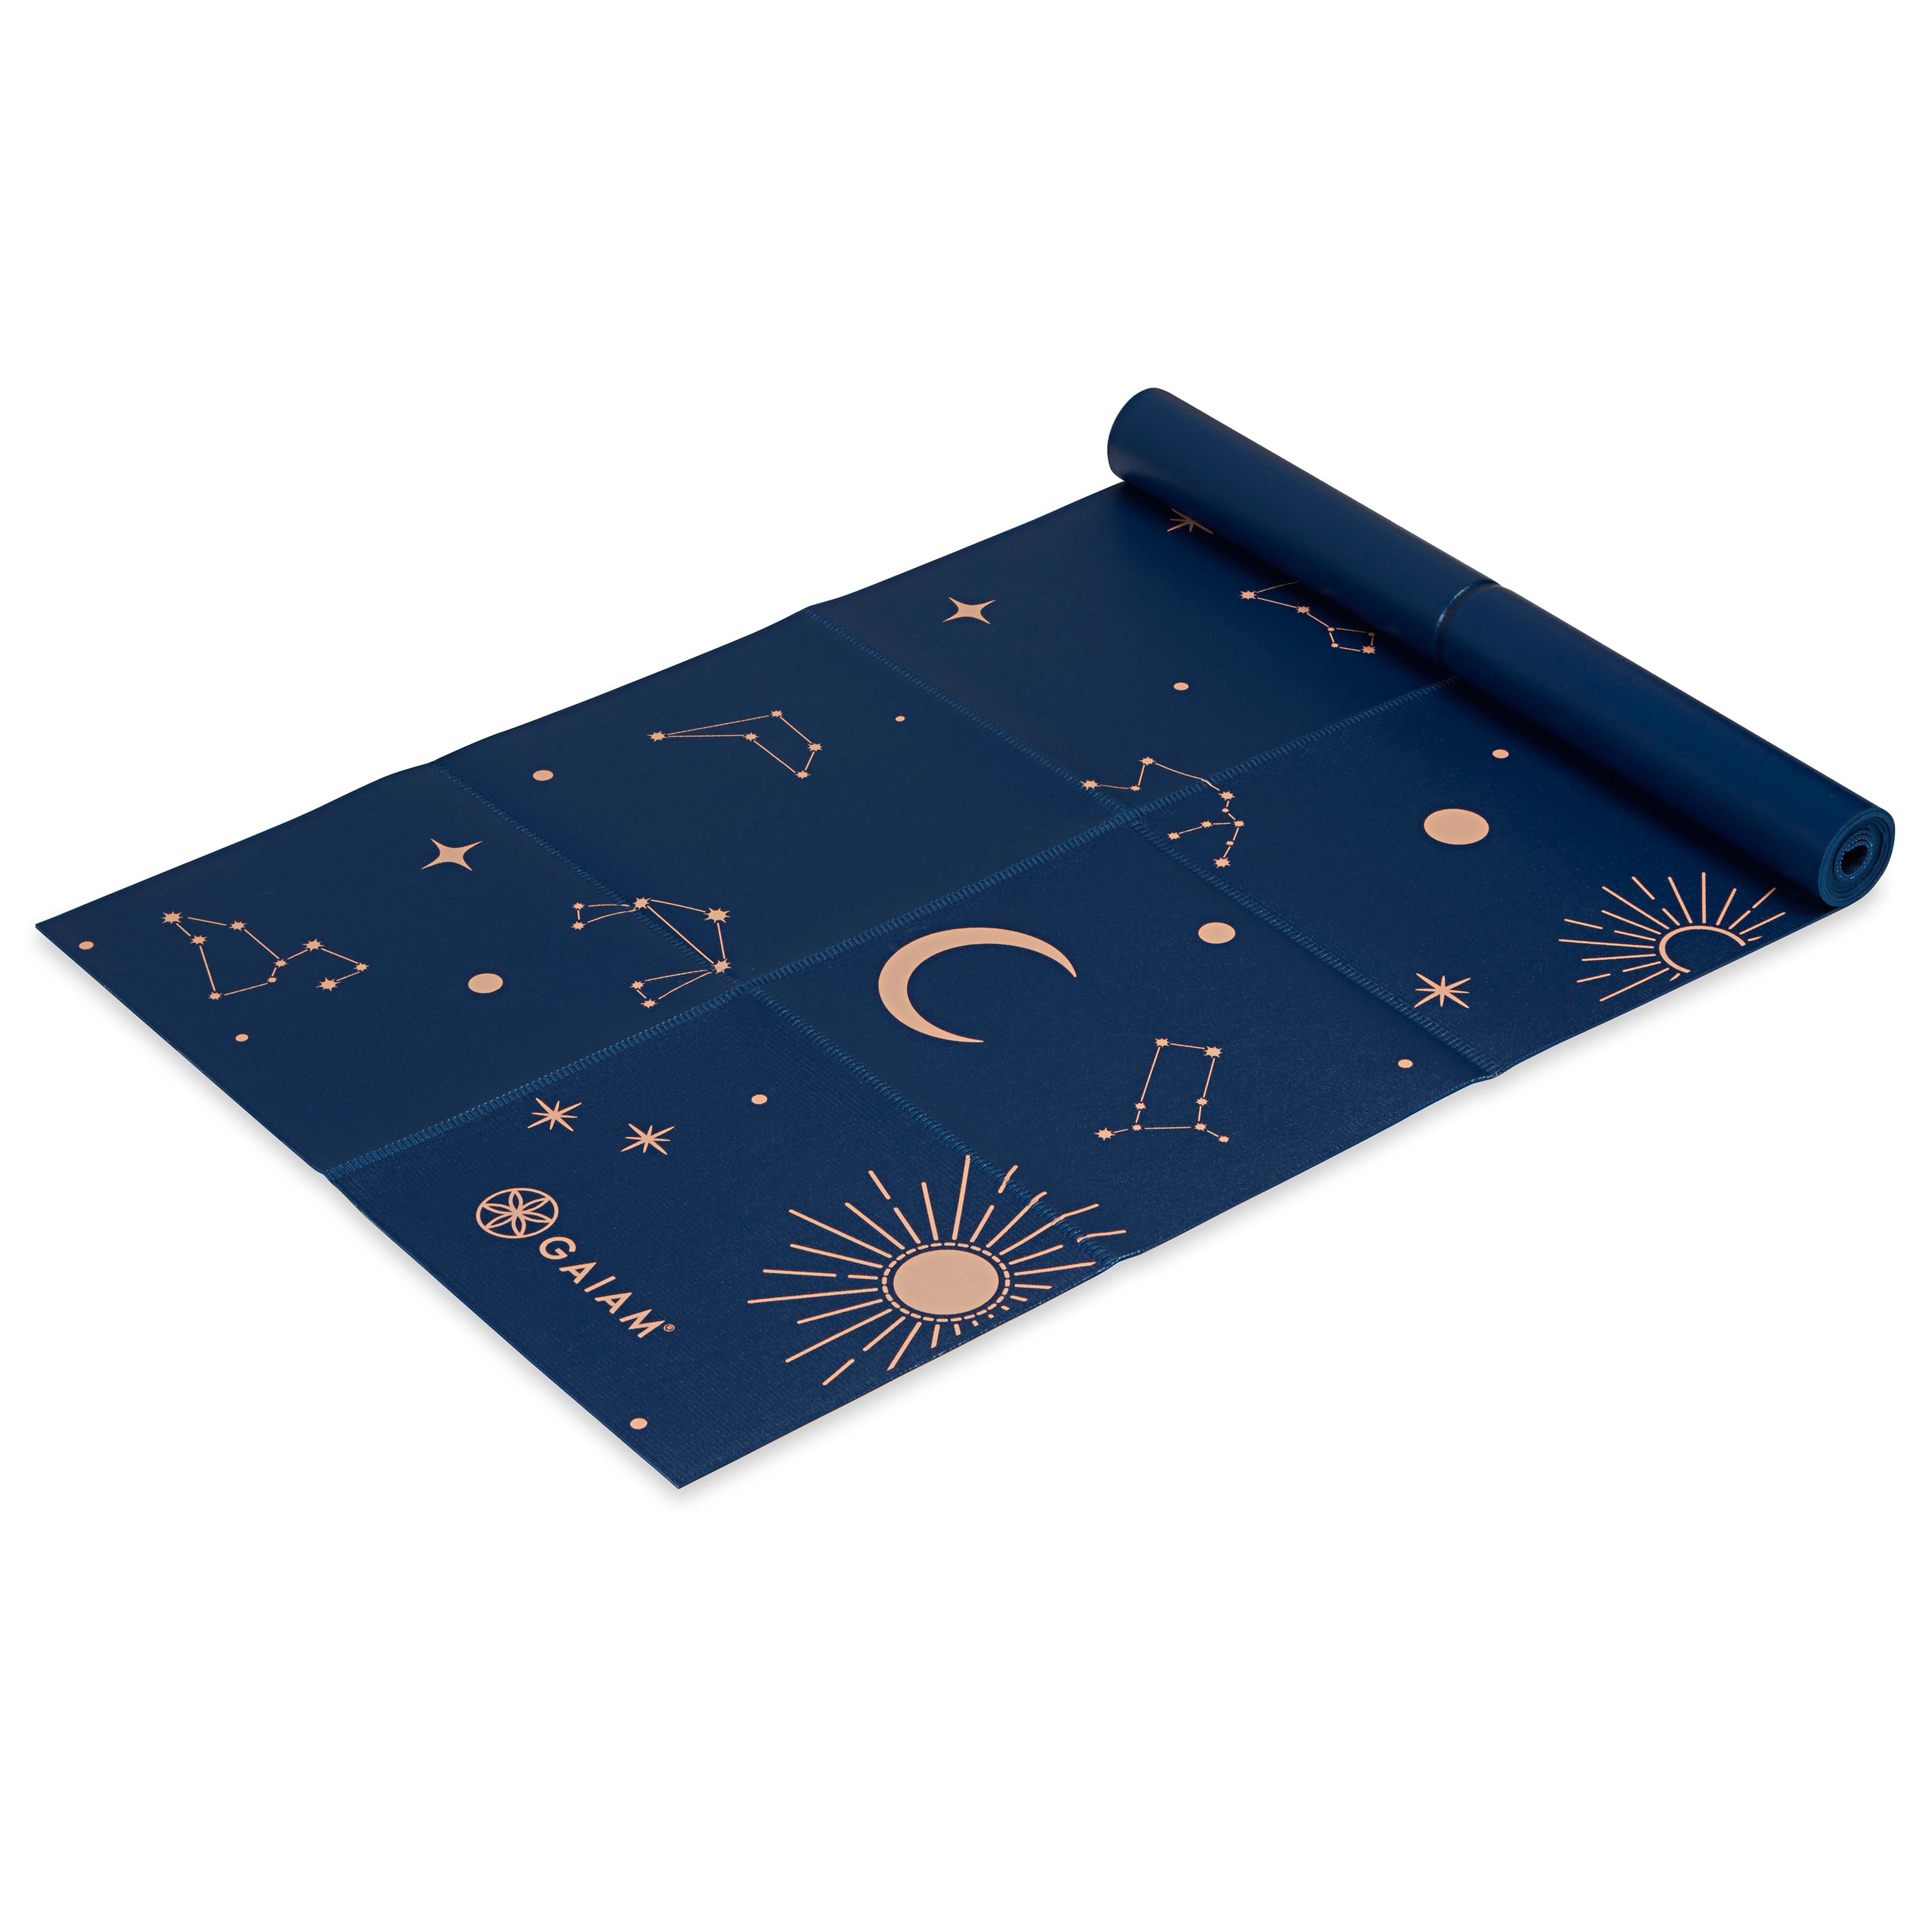 Midsummer Nights Foldable Yoga Mat